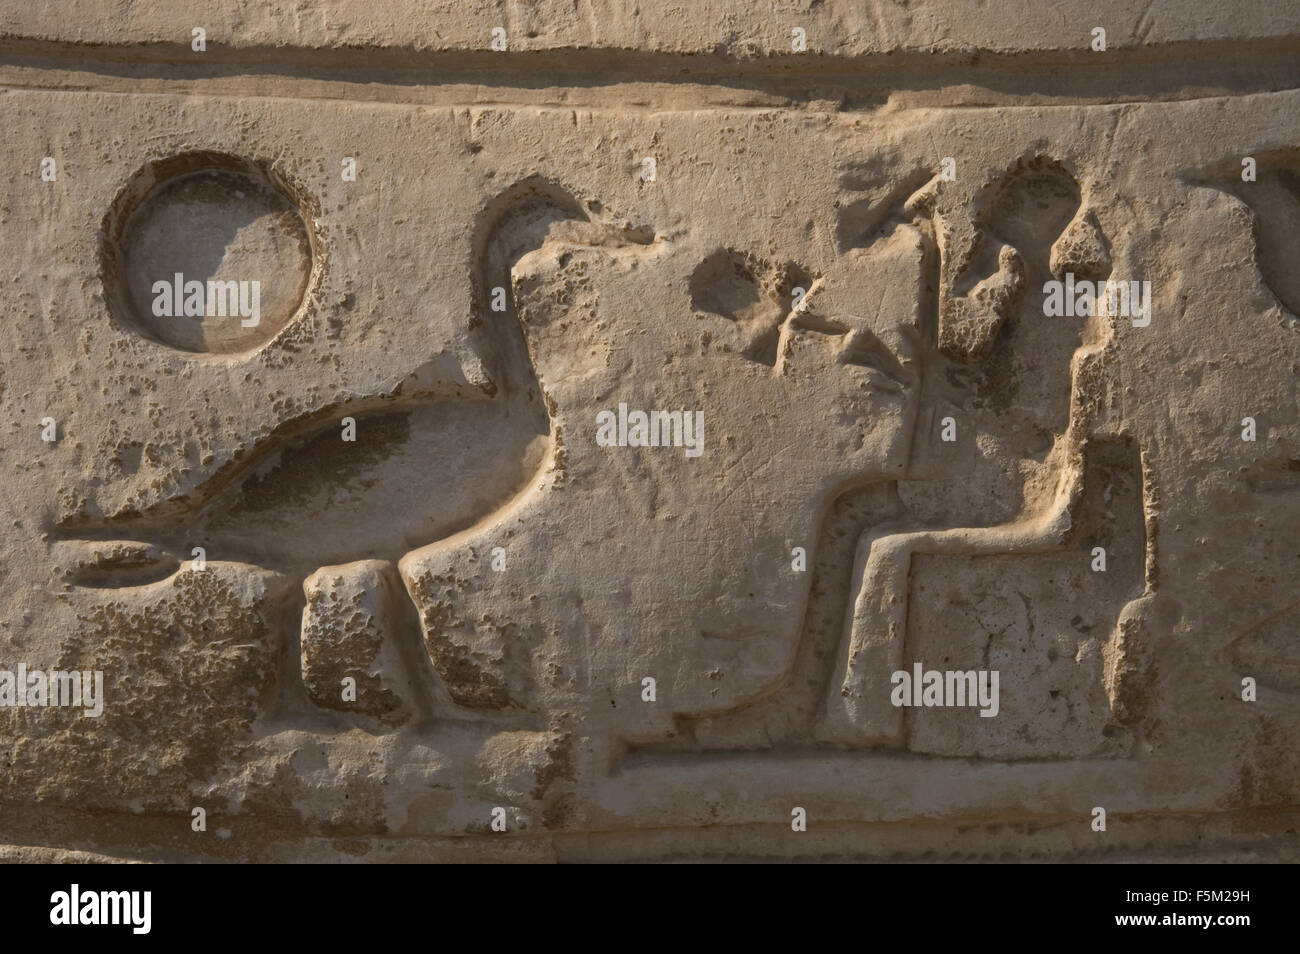 Hieroglyphic writing. Mit Rahina Open Air Museum. Memphis. Egypt. Stock Photo